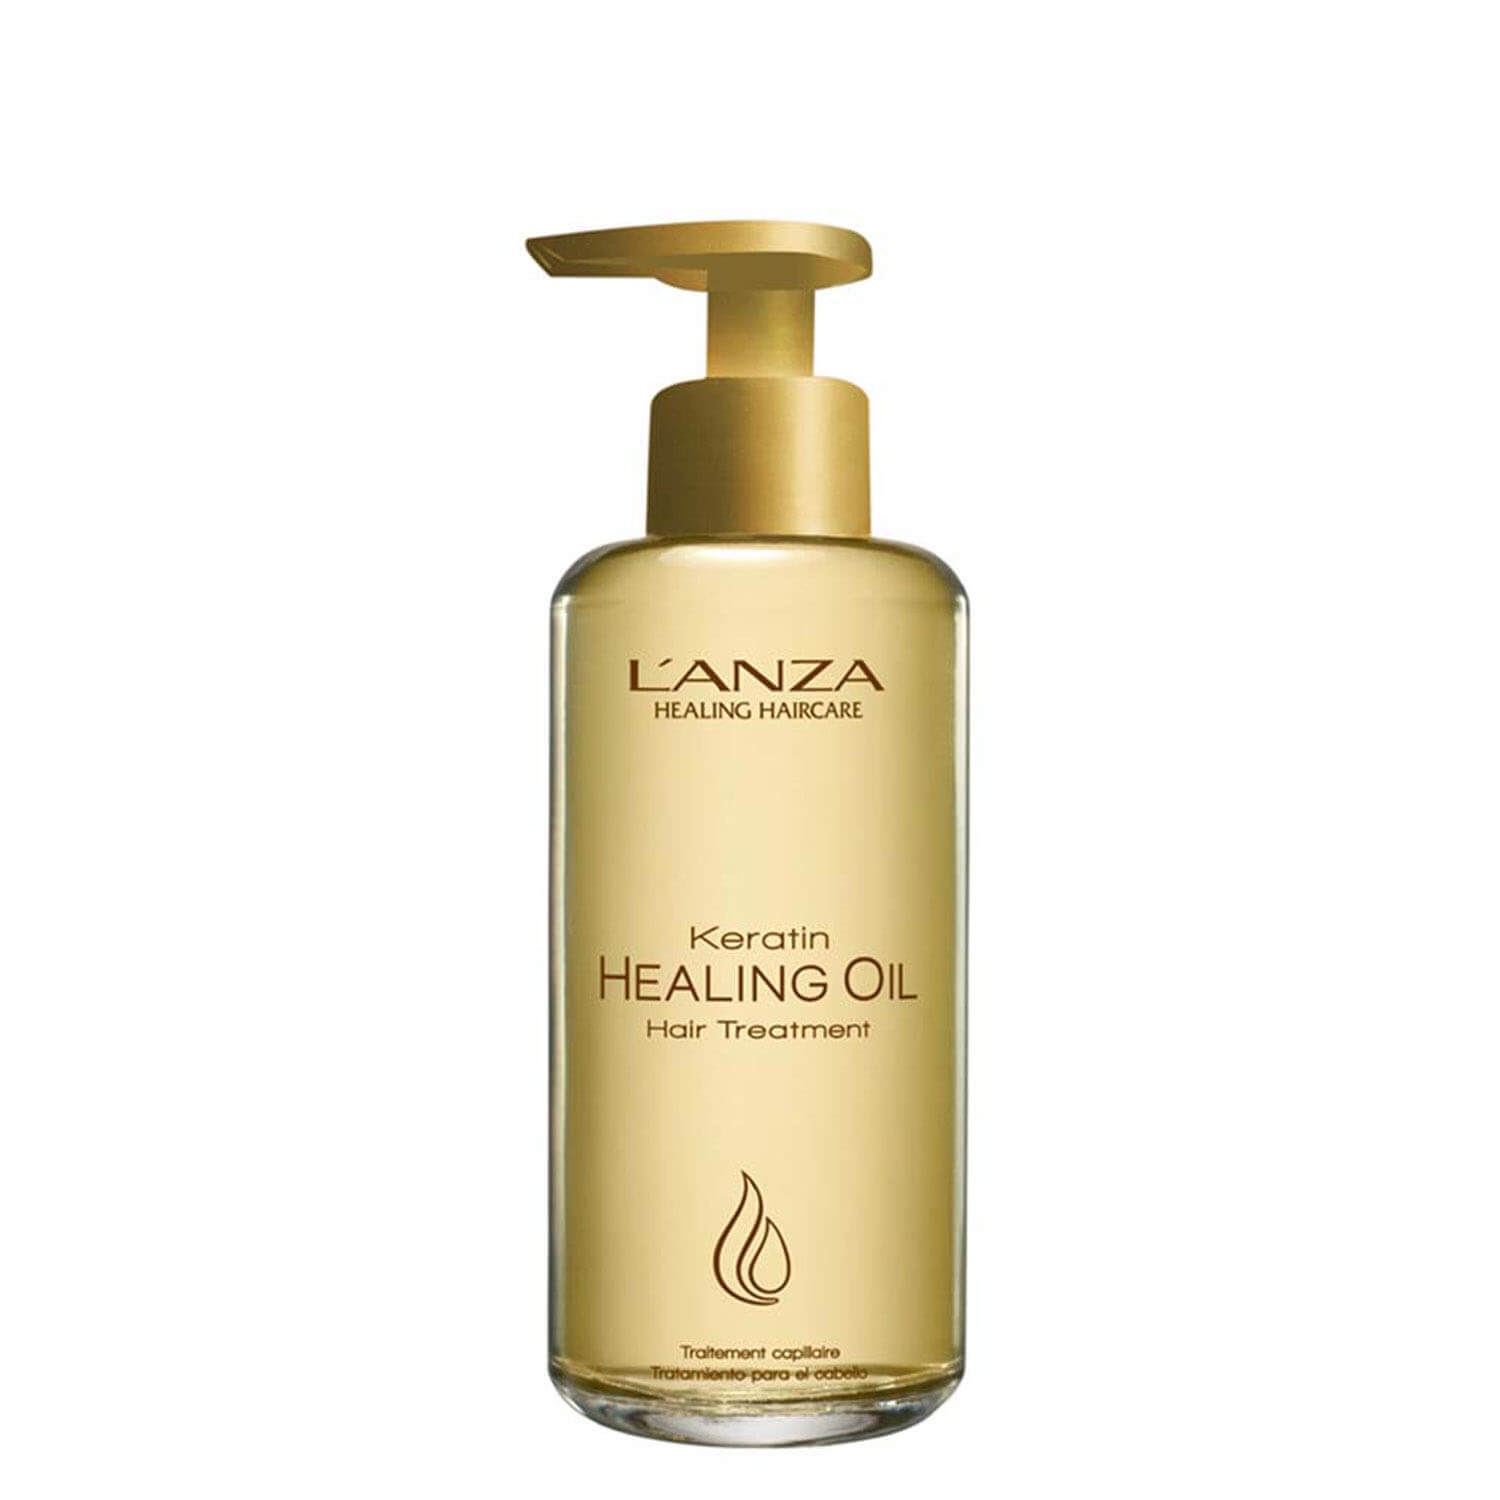 Produktbild von Keratin Healing Oil - Hair Treatment